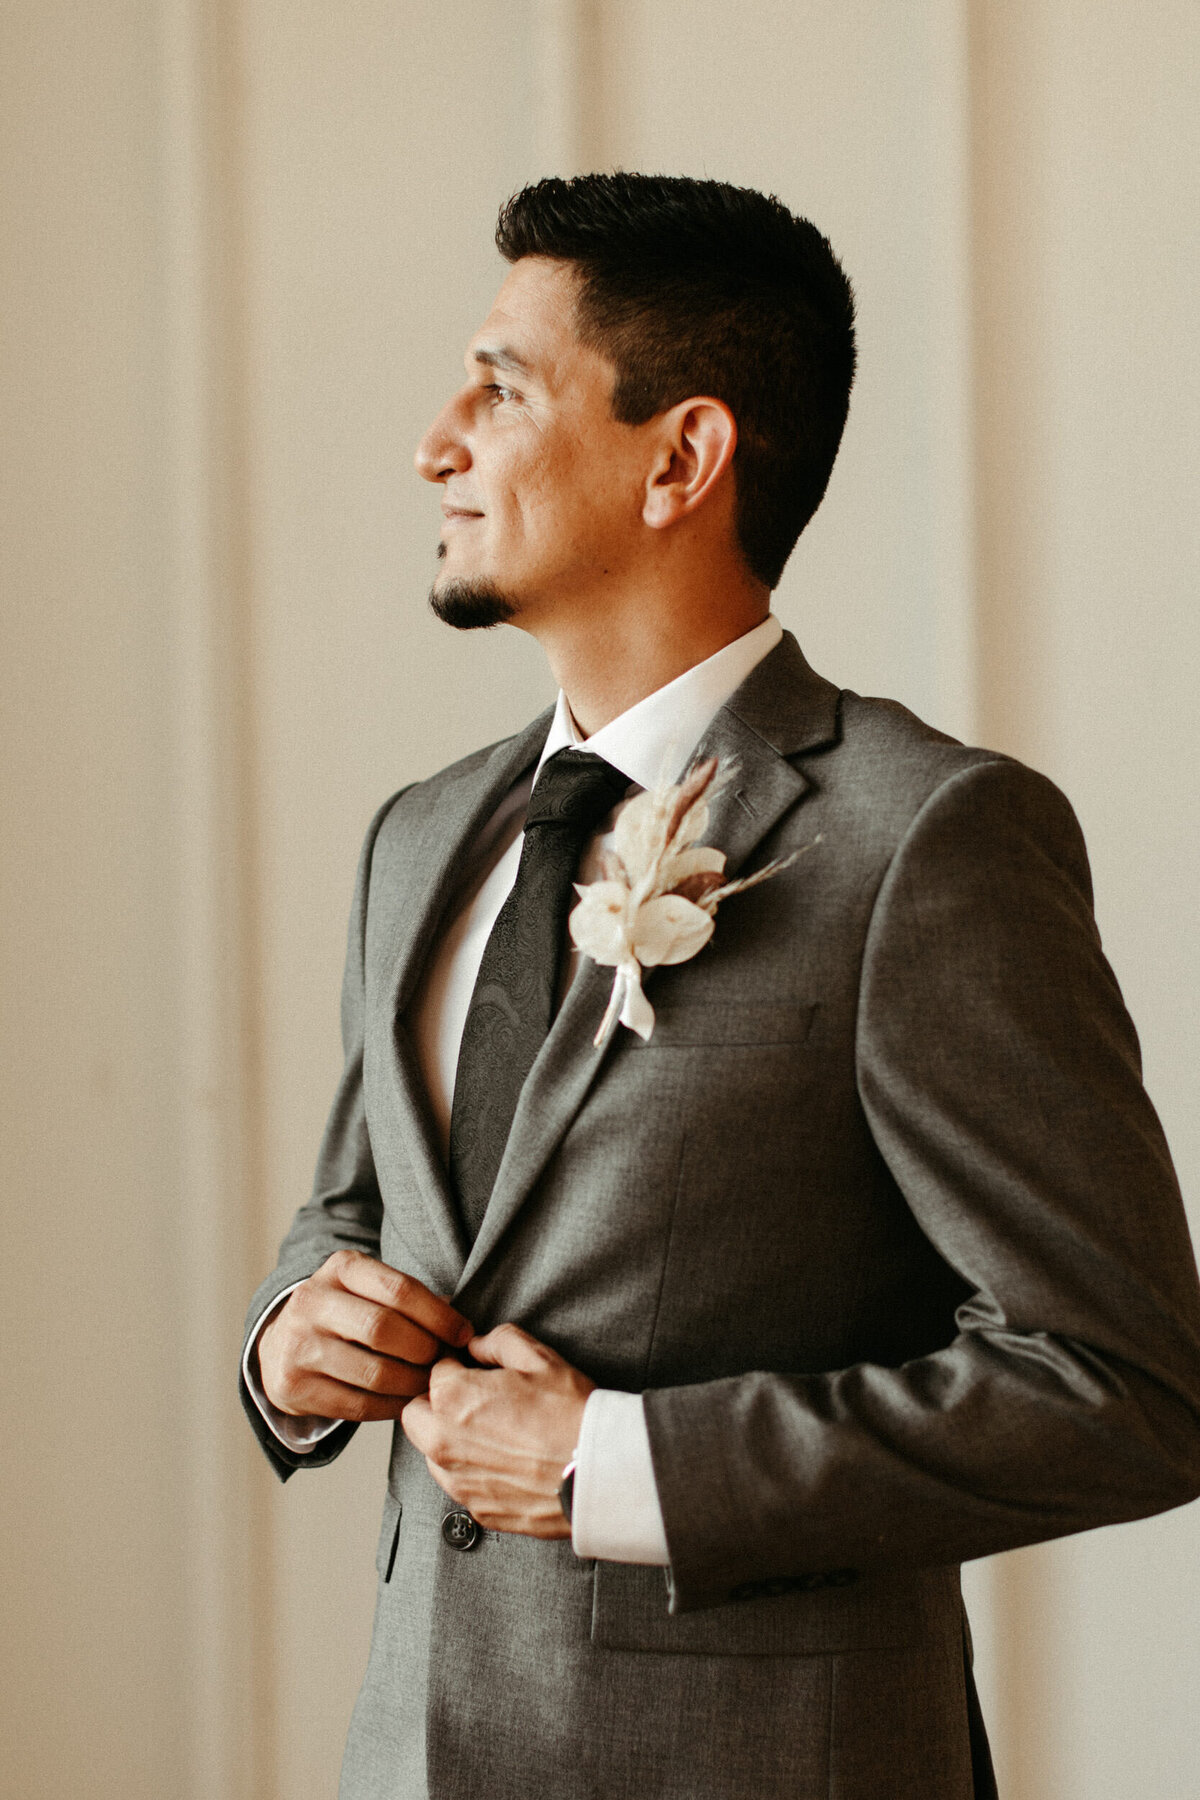 nashville-tennessee-tn-14tenn-wedding-venue-groom-getting-ready-boutonniere